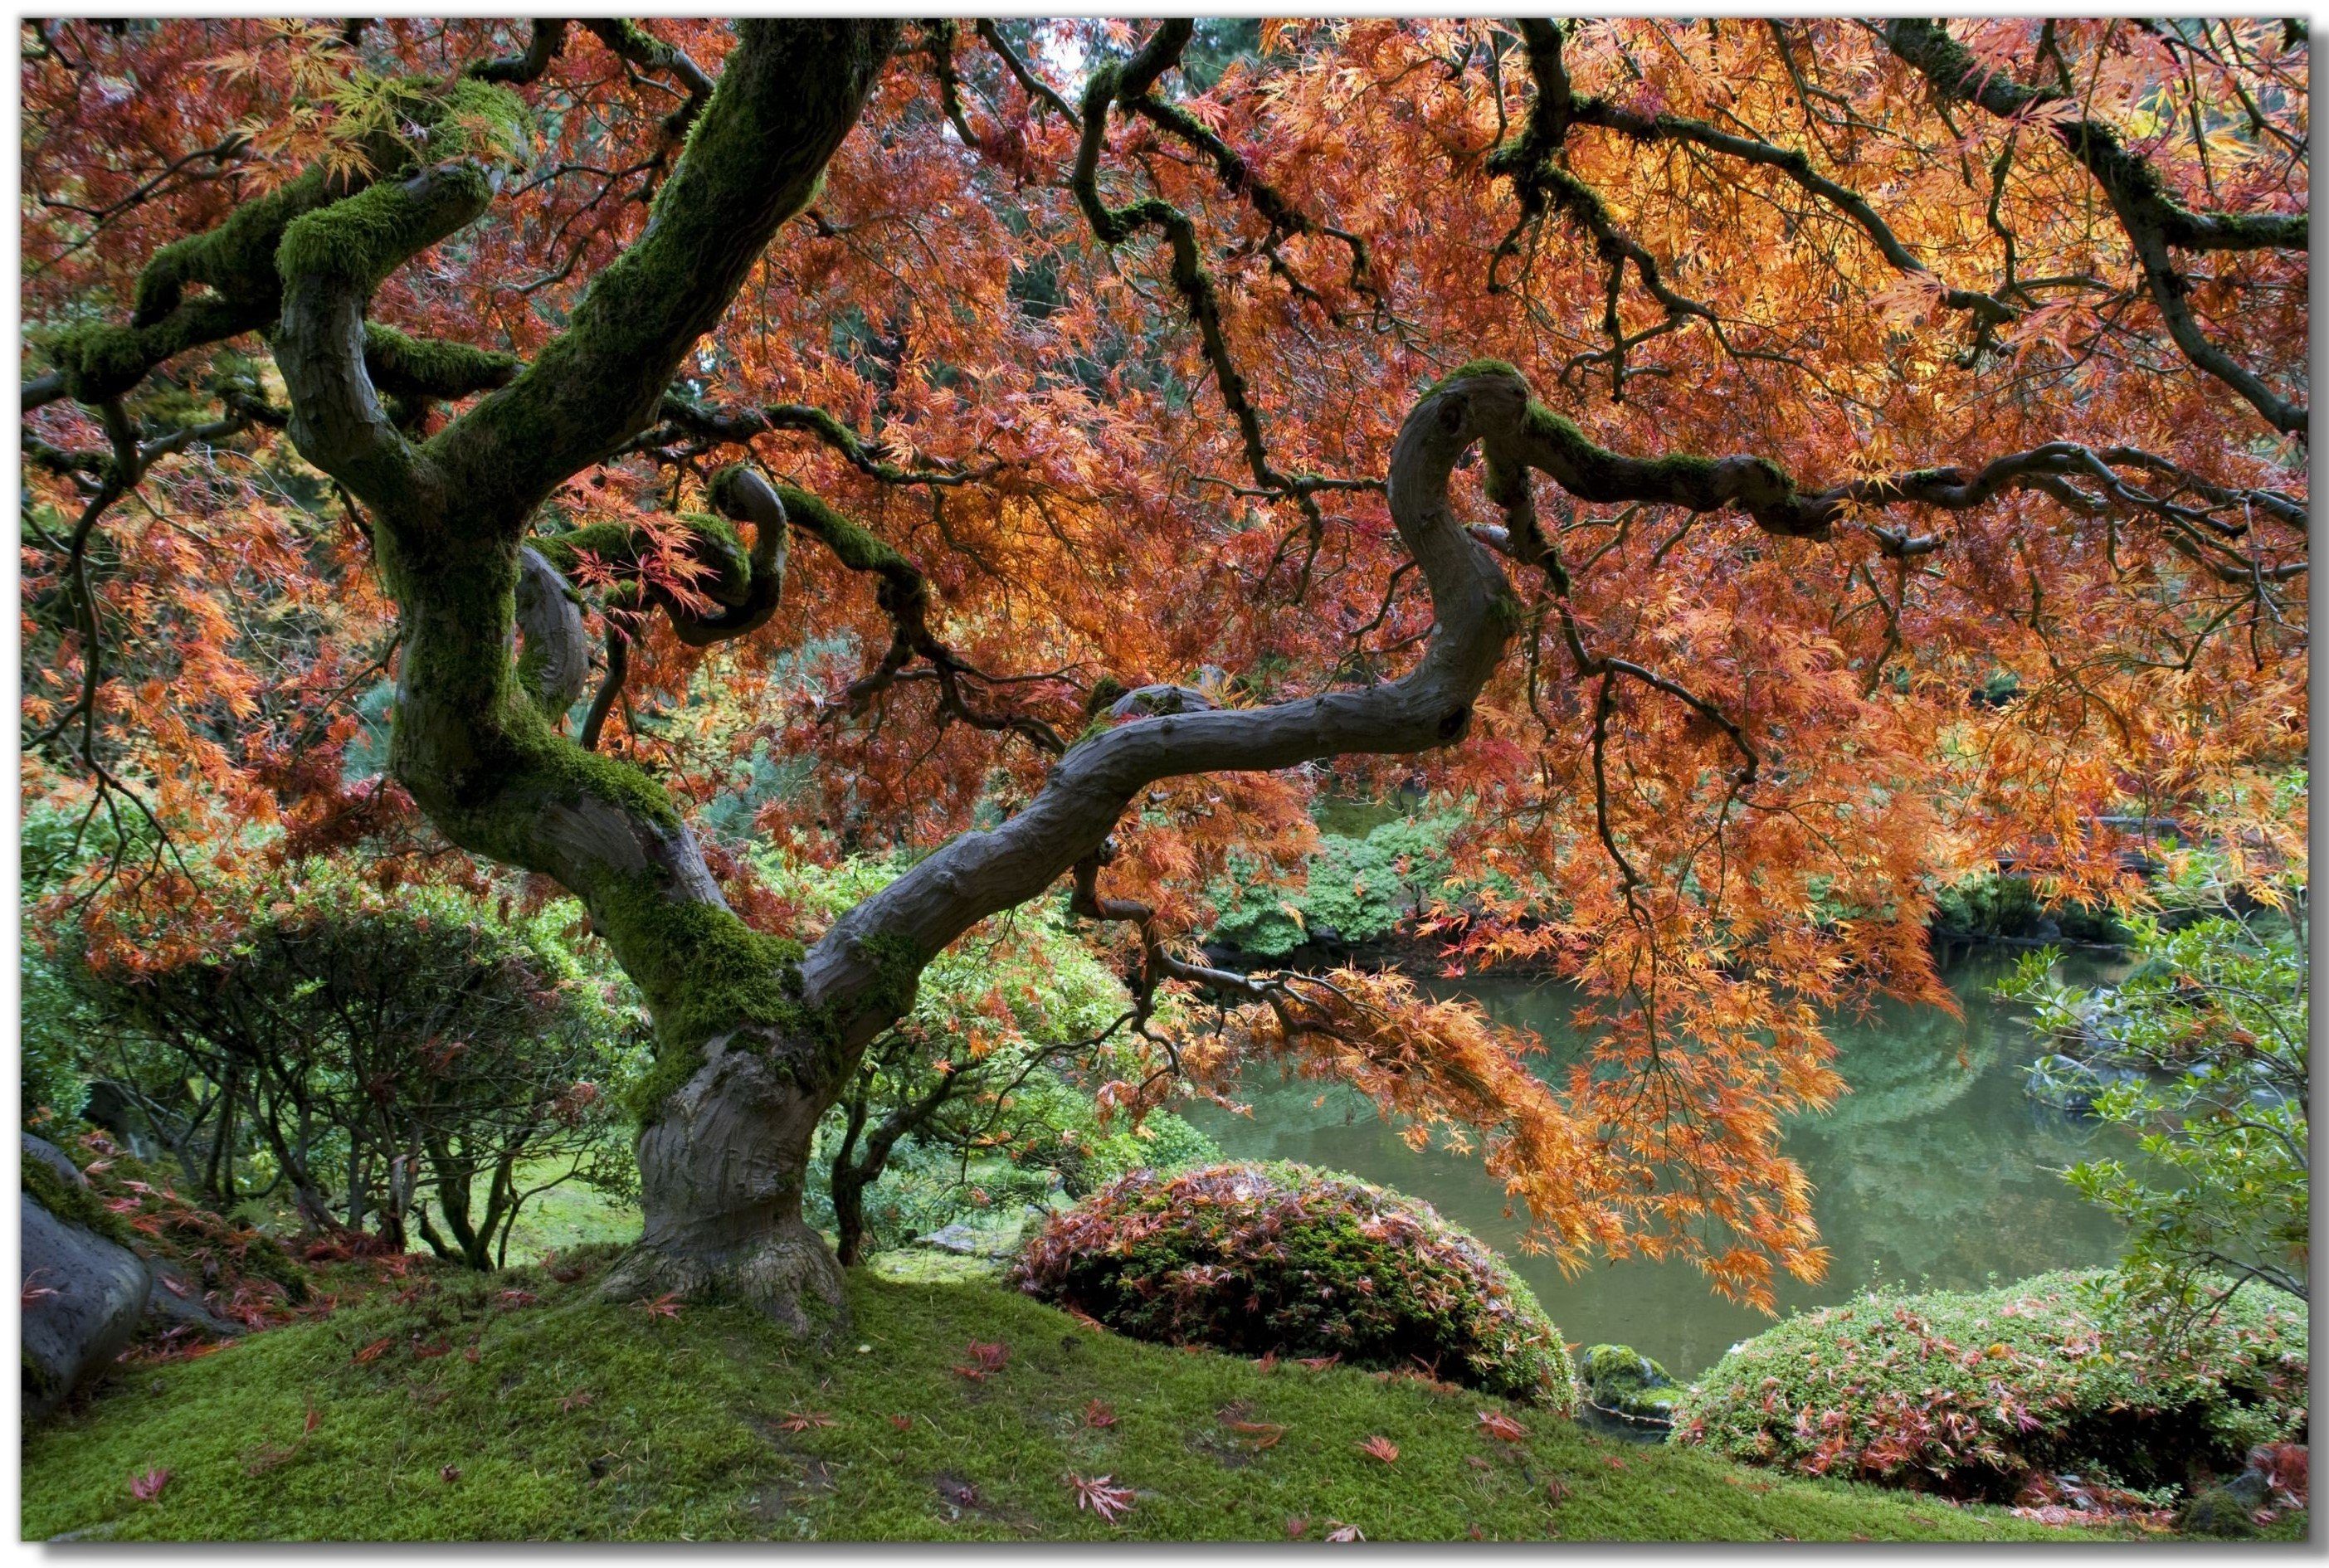 Victor (Zenith) Leinwandbild Leinwandbild \"Japanischer Baum\" - Größe: 30 x 45 cm, Bäume, in 30x45 cm, Wandbild Leinwand Bäume, Landschaftsbild